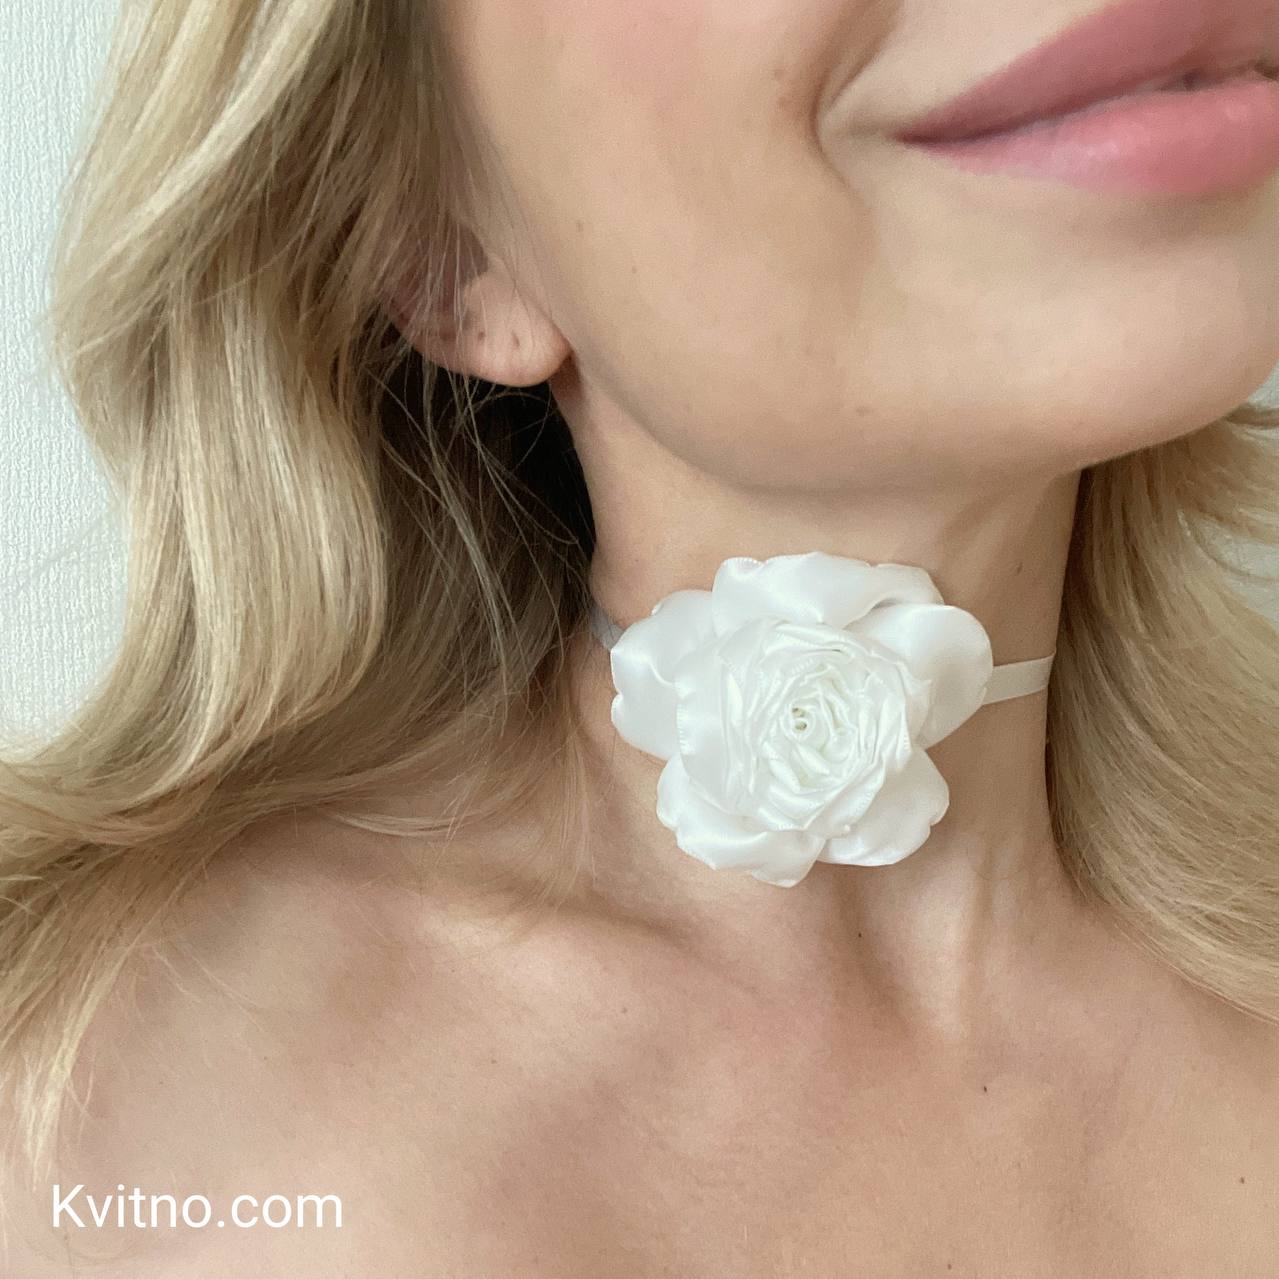 Real Rose Design - Baby Rose - White Flower Choker Necklace